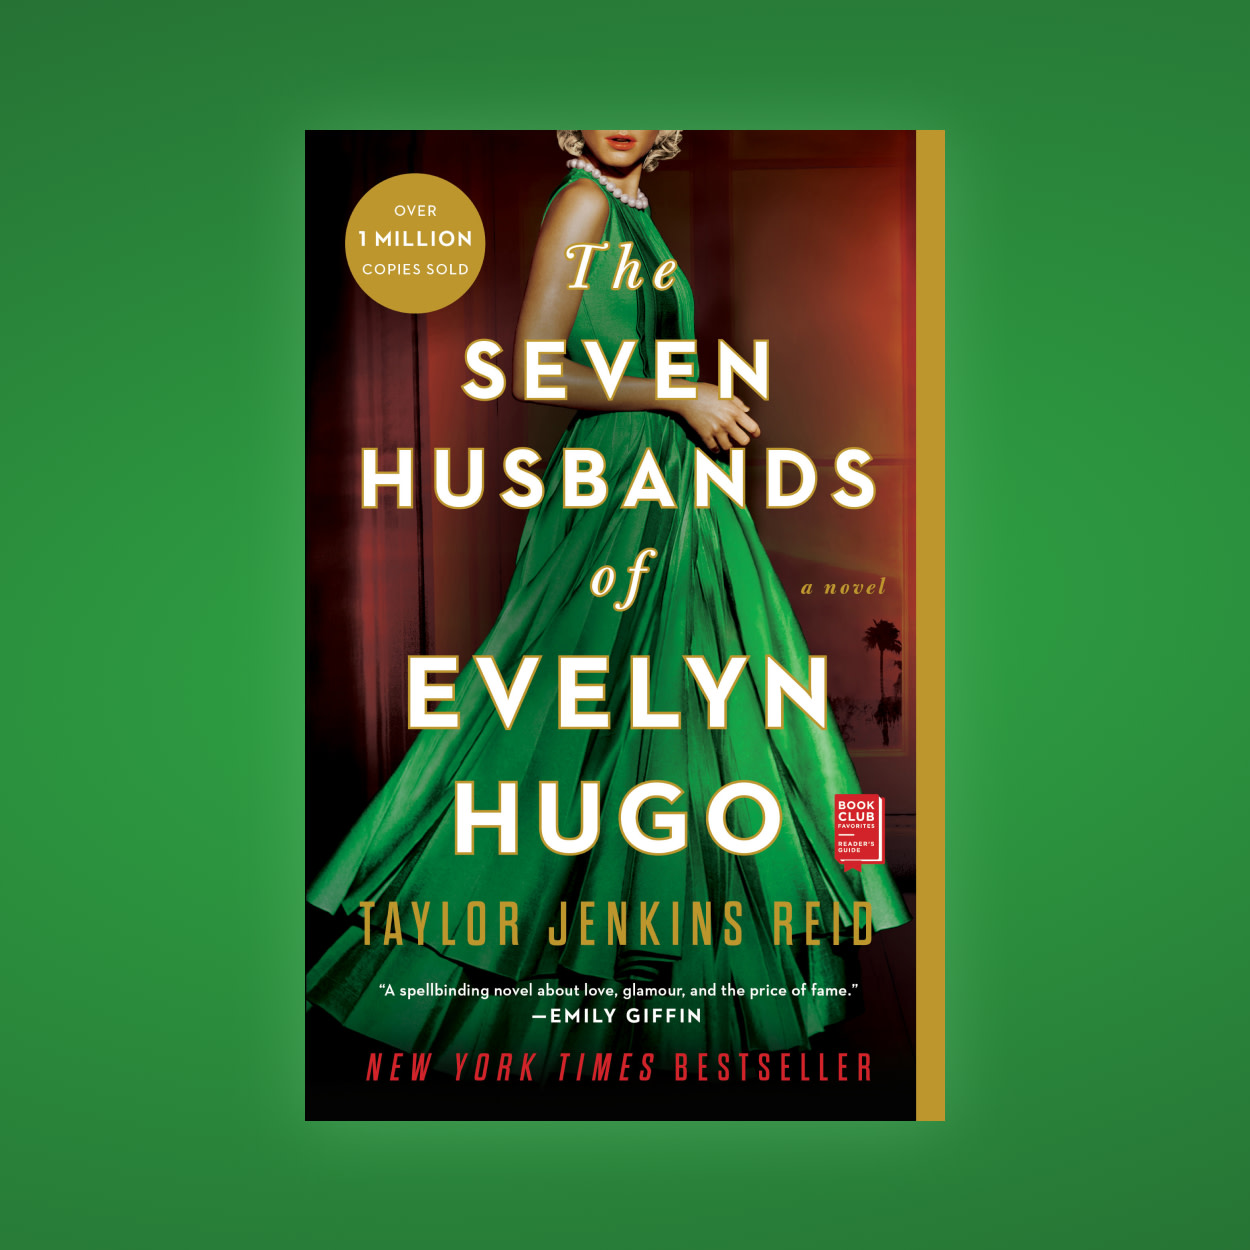 The Seven Husbands of Evelyn Hugo movie is happening at Netflix